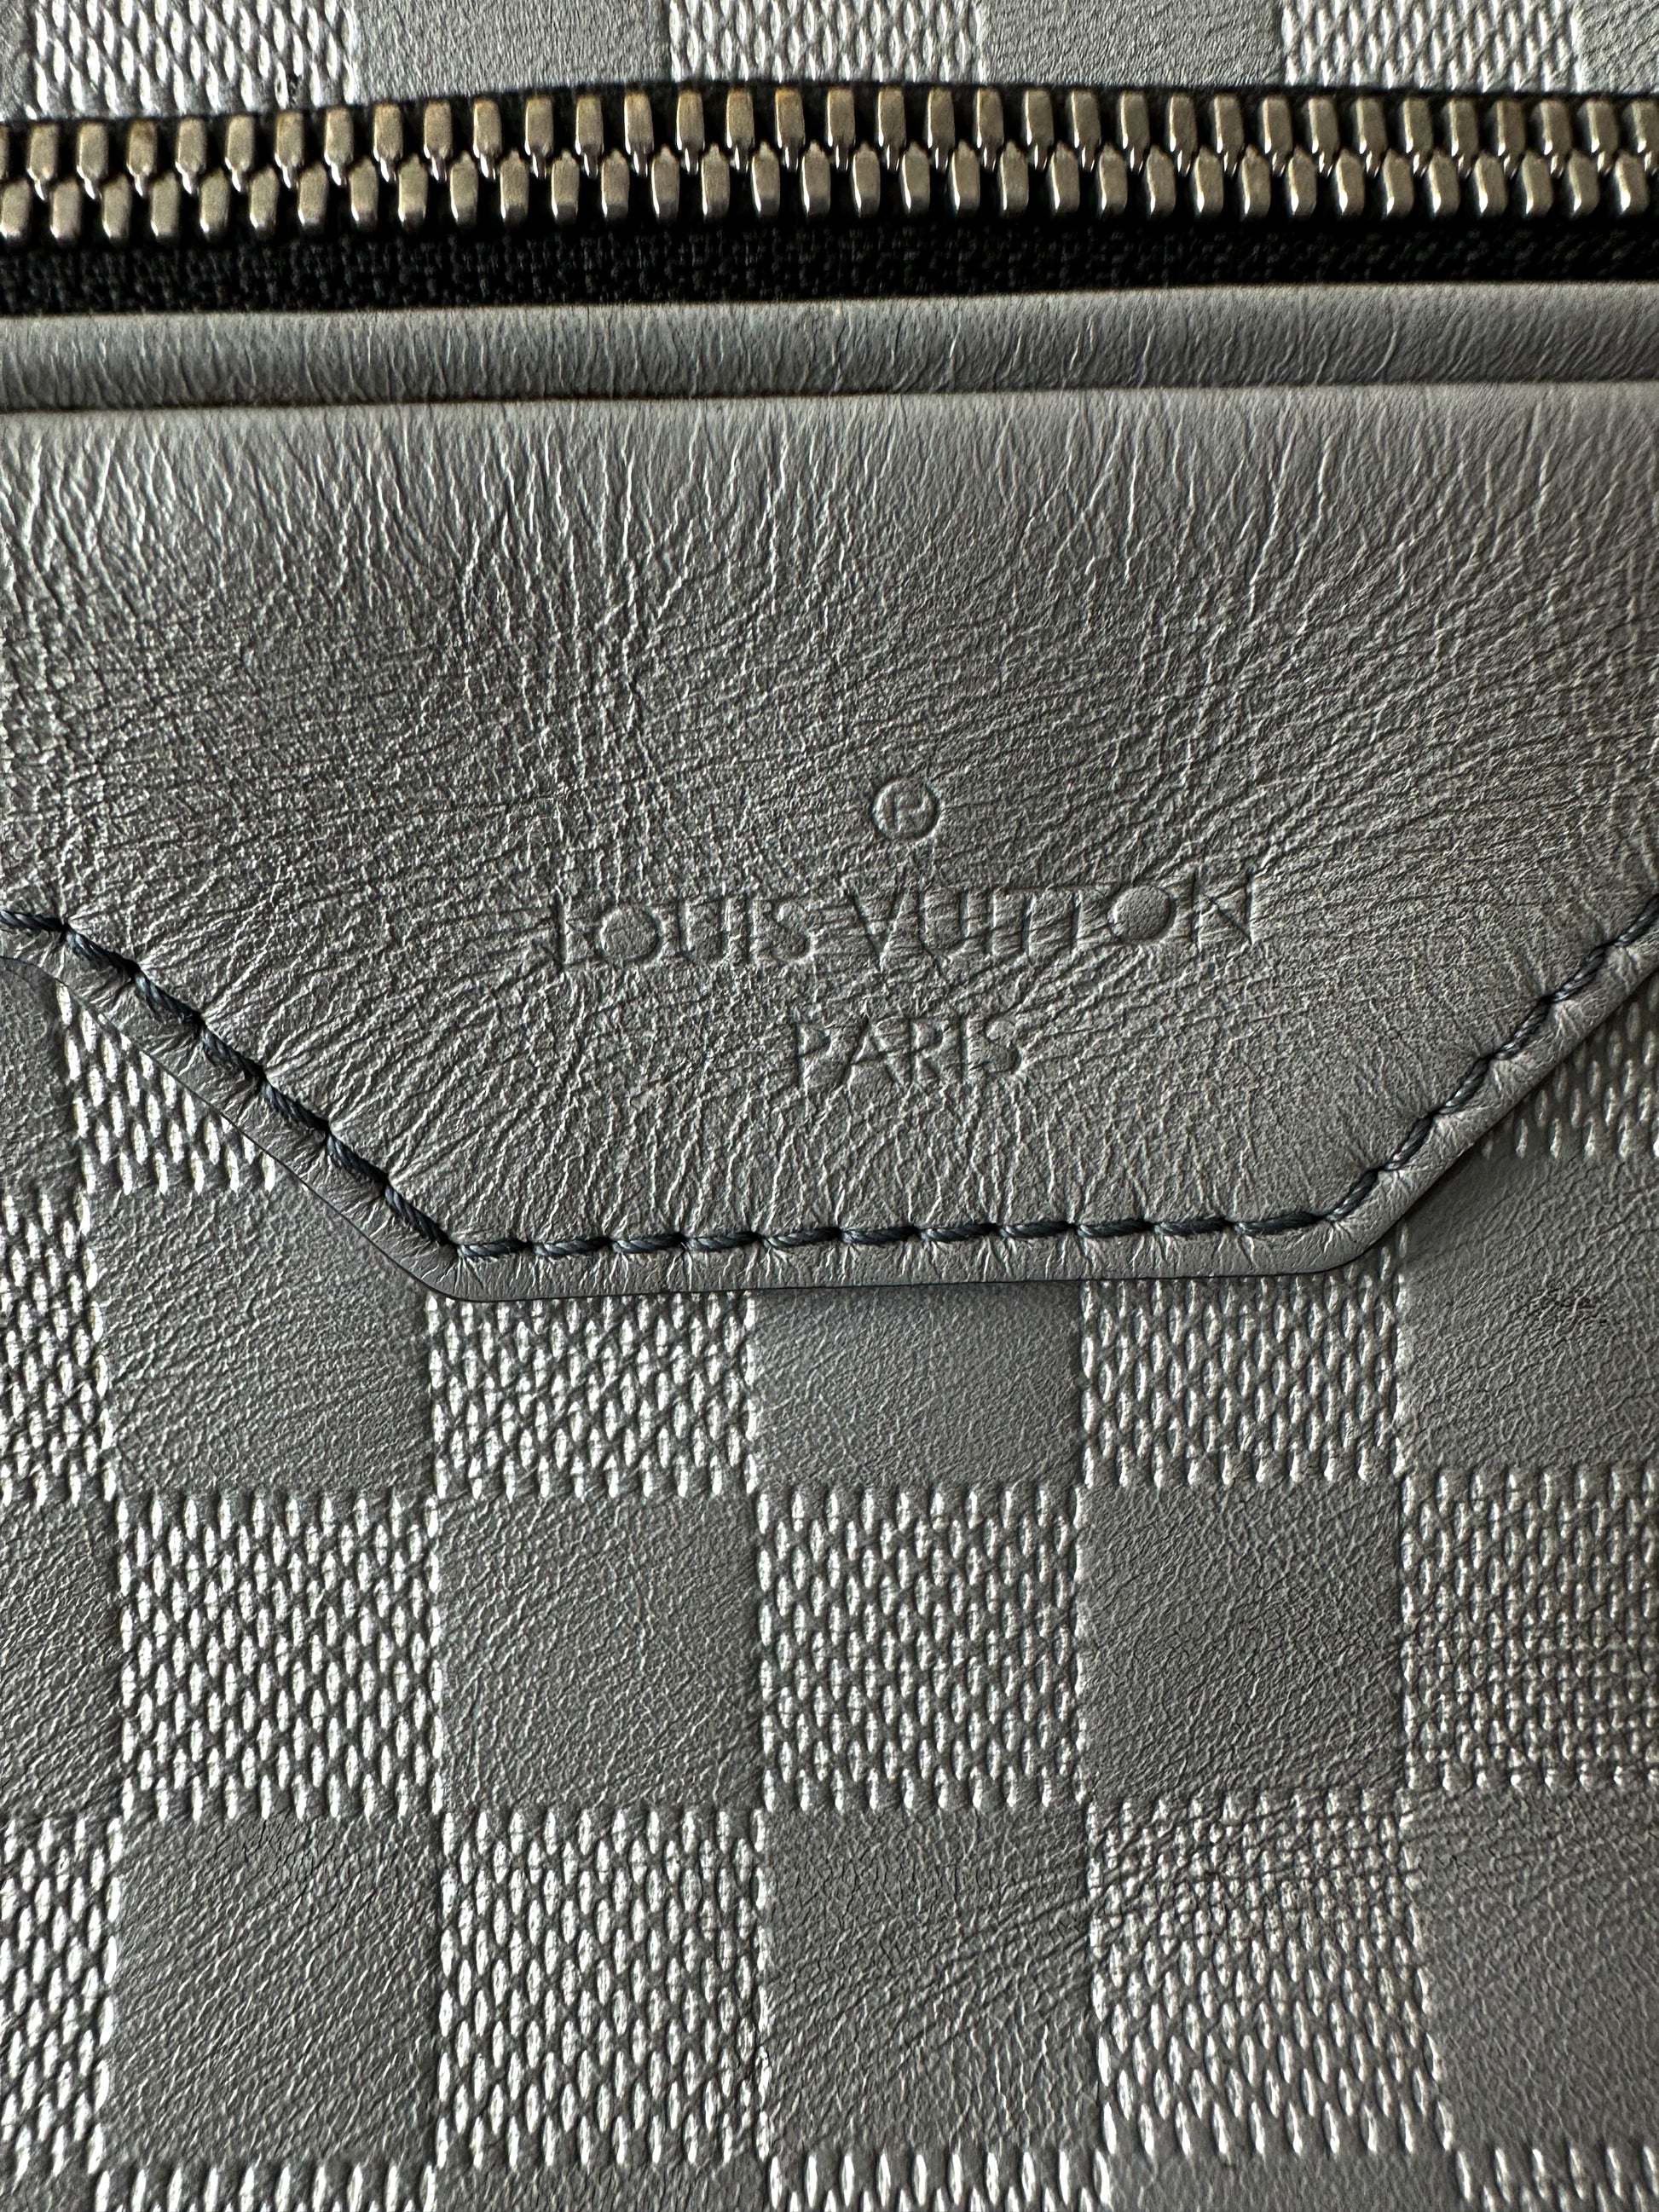 Louis Vuitton Campus Backpack Graphite Damier Graphite